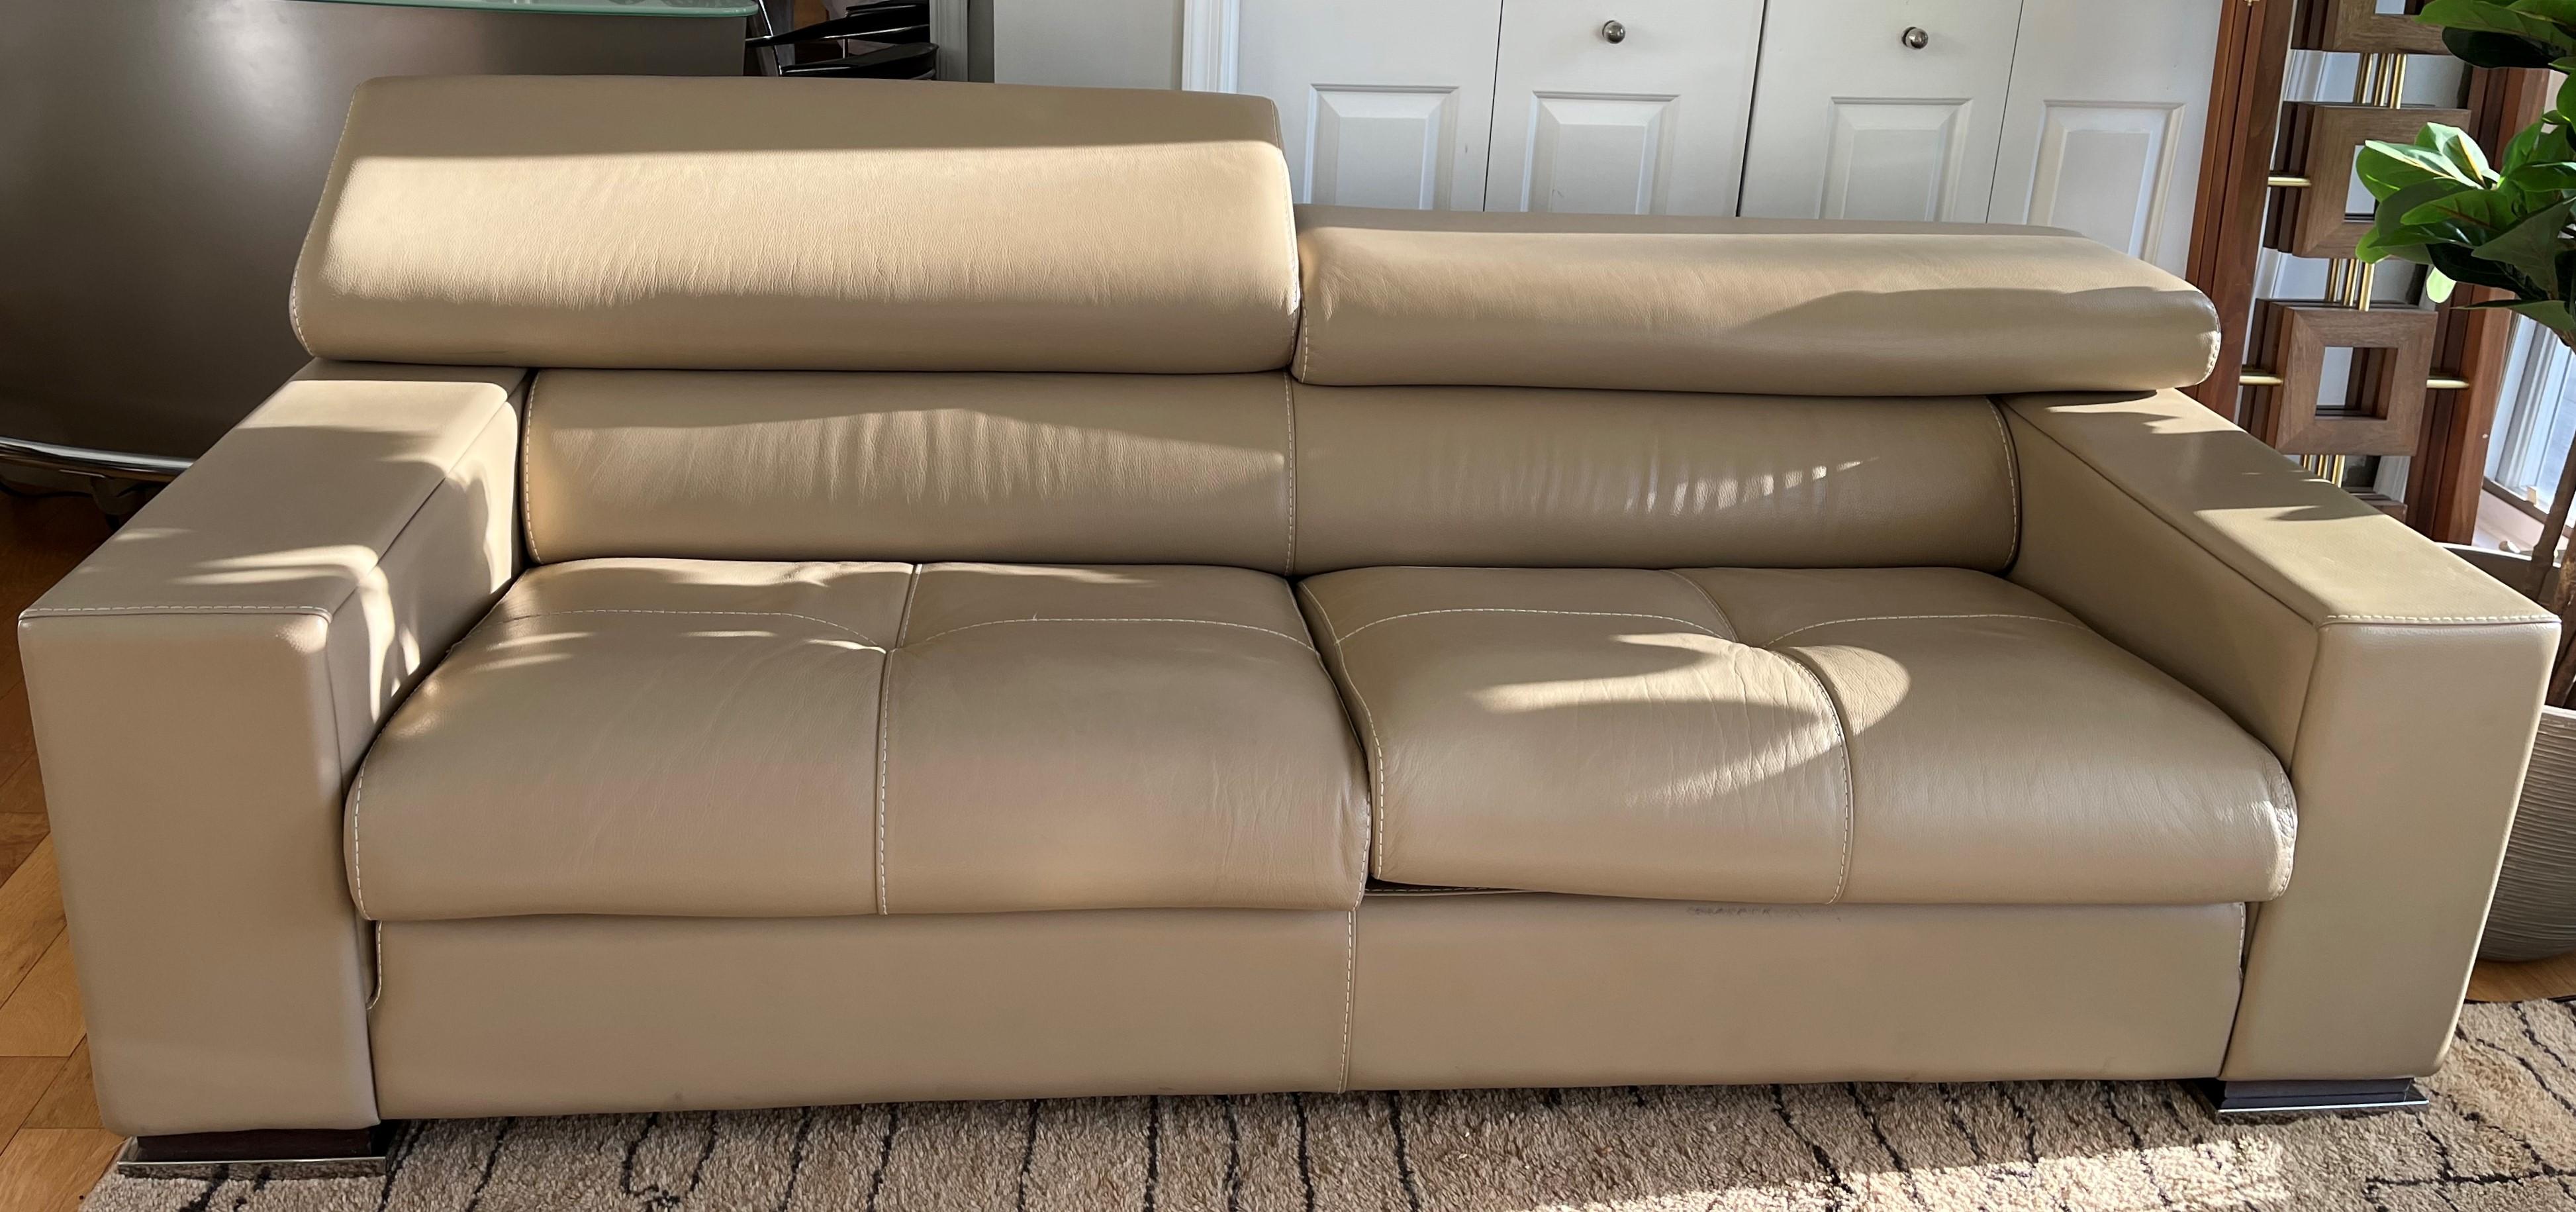 gamma arredamenti leather sofa